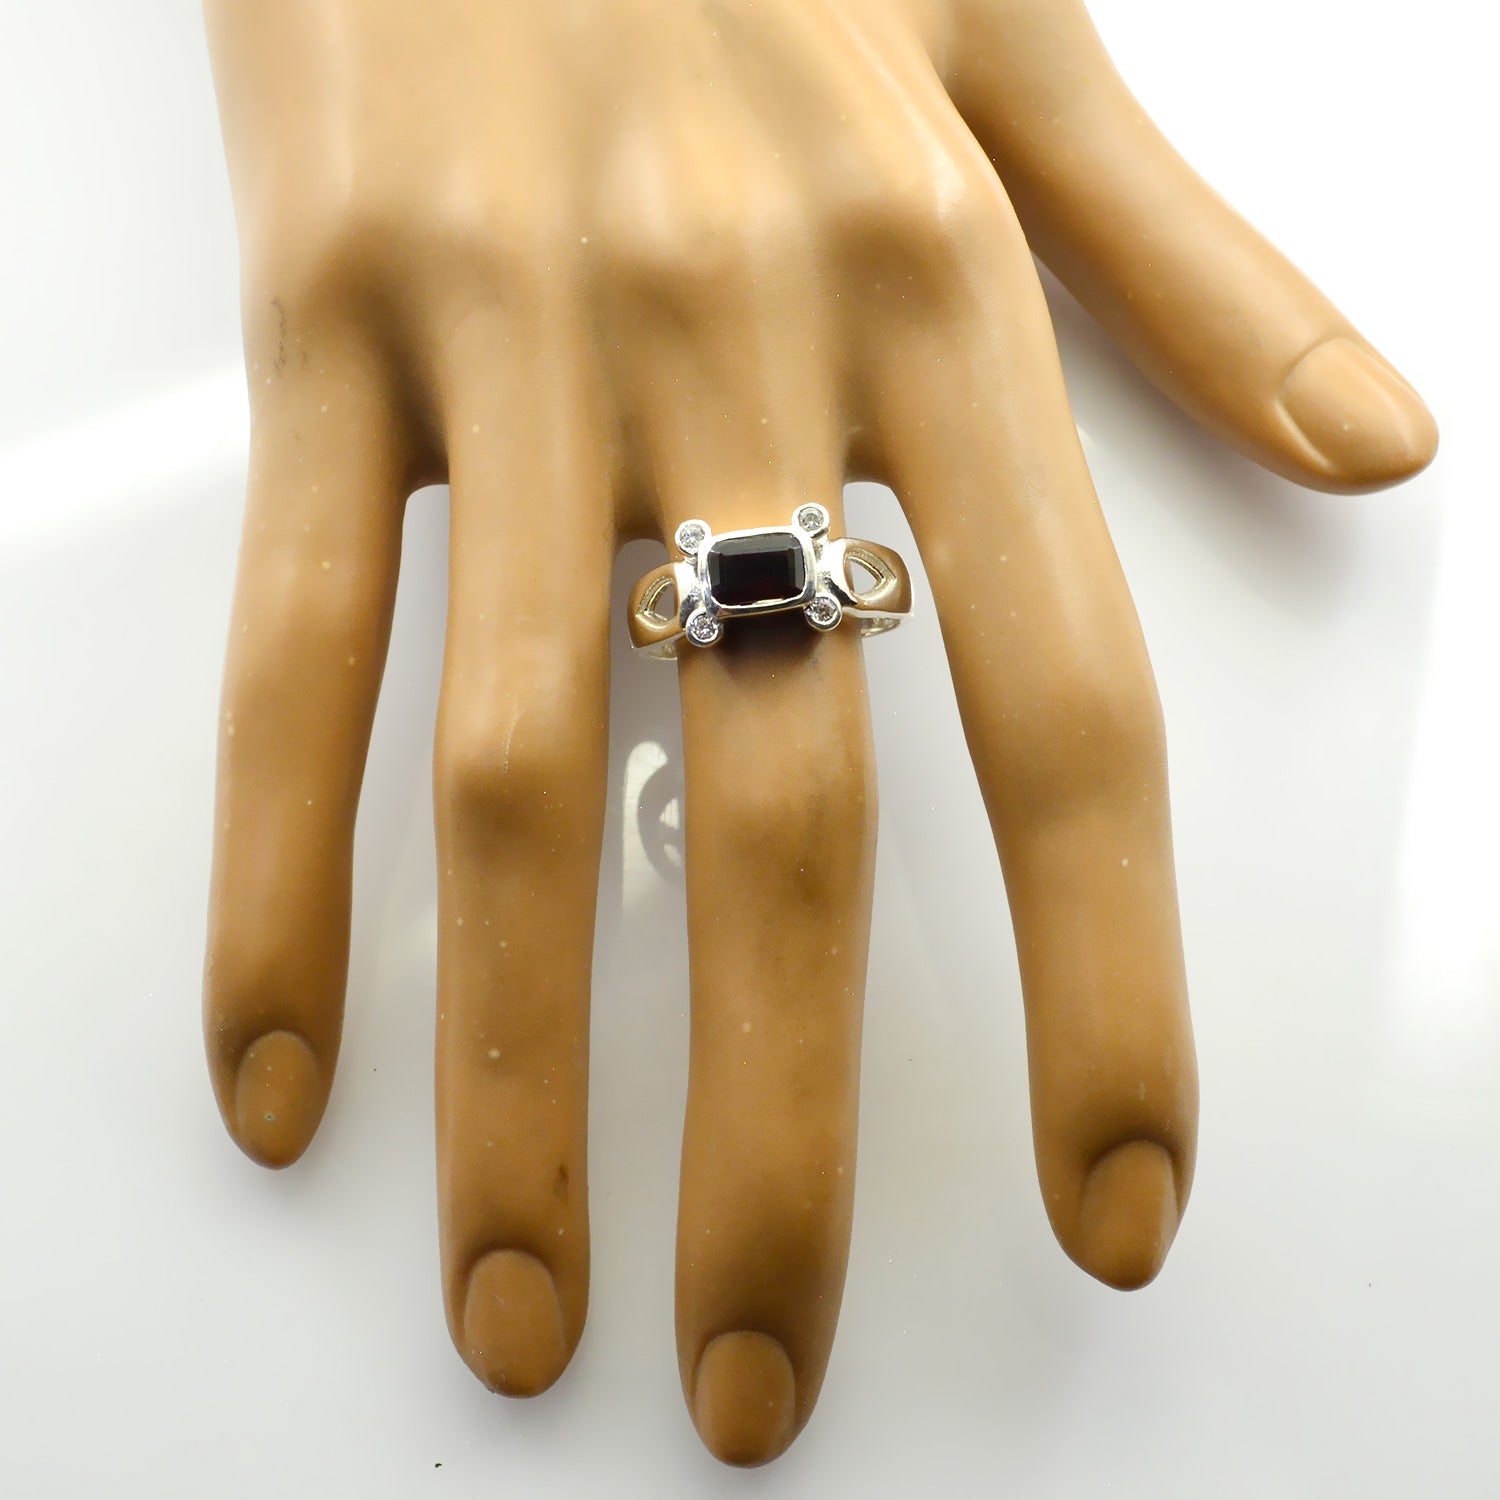 Riyo Winning Gemstones Garnet Solid Silver Rings Gift For Girls